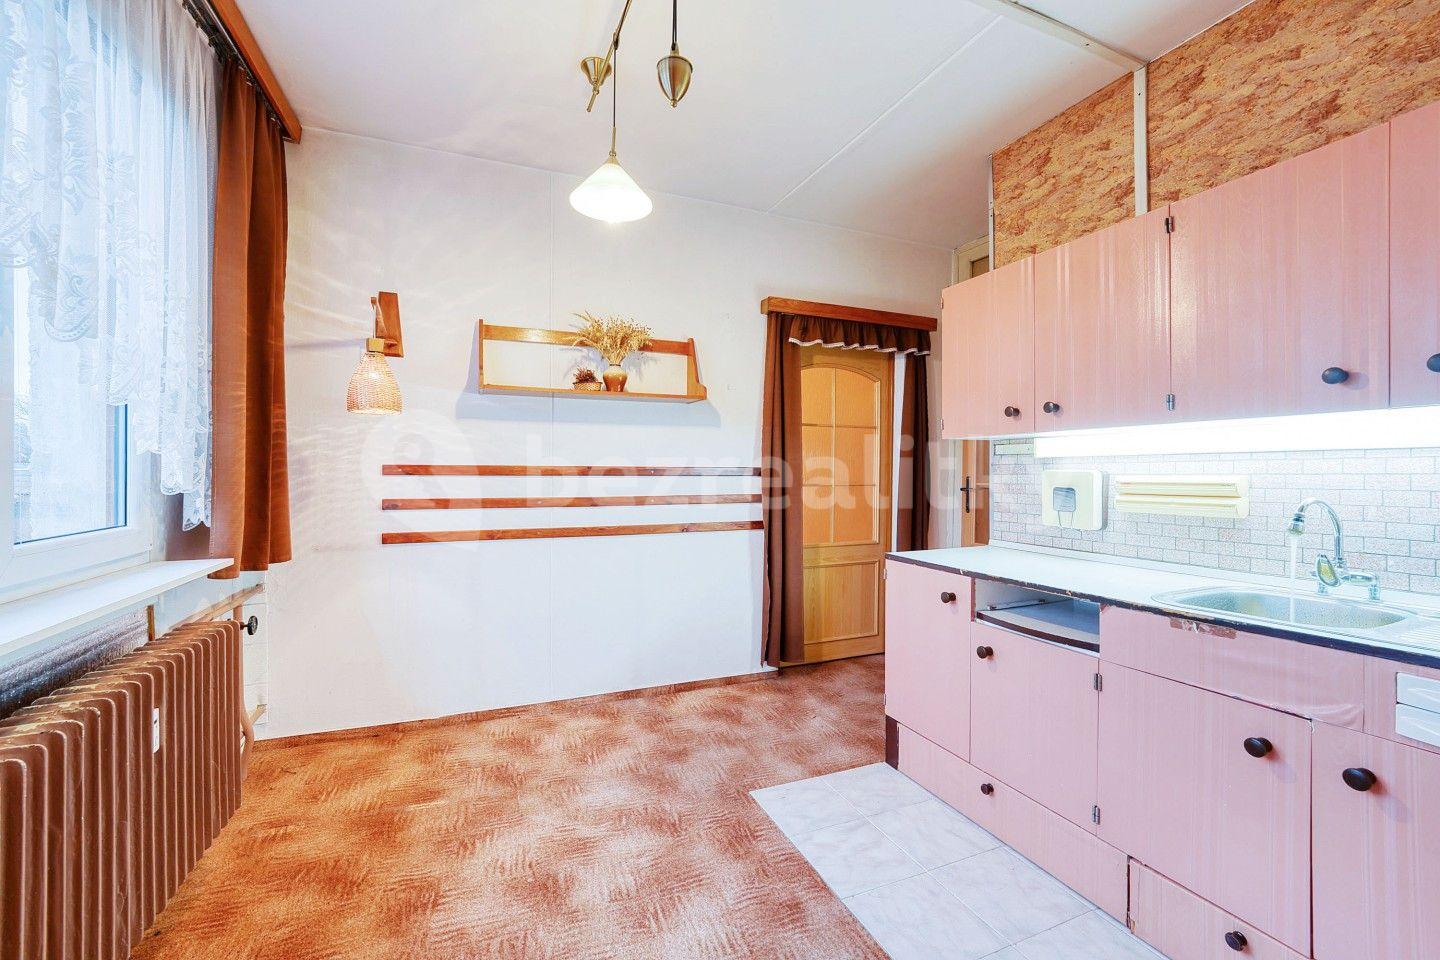 2 bedroom flat for sale, 75 m², Jankovského, Staňkov, Plzeňský Region